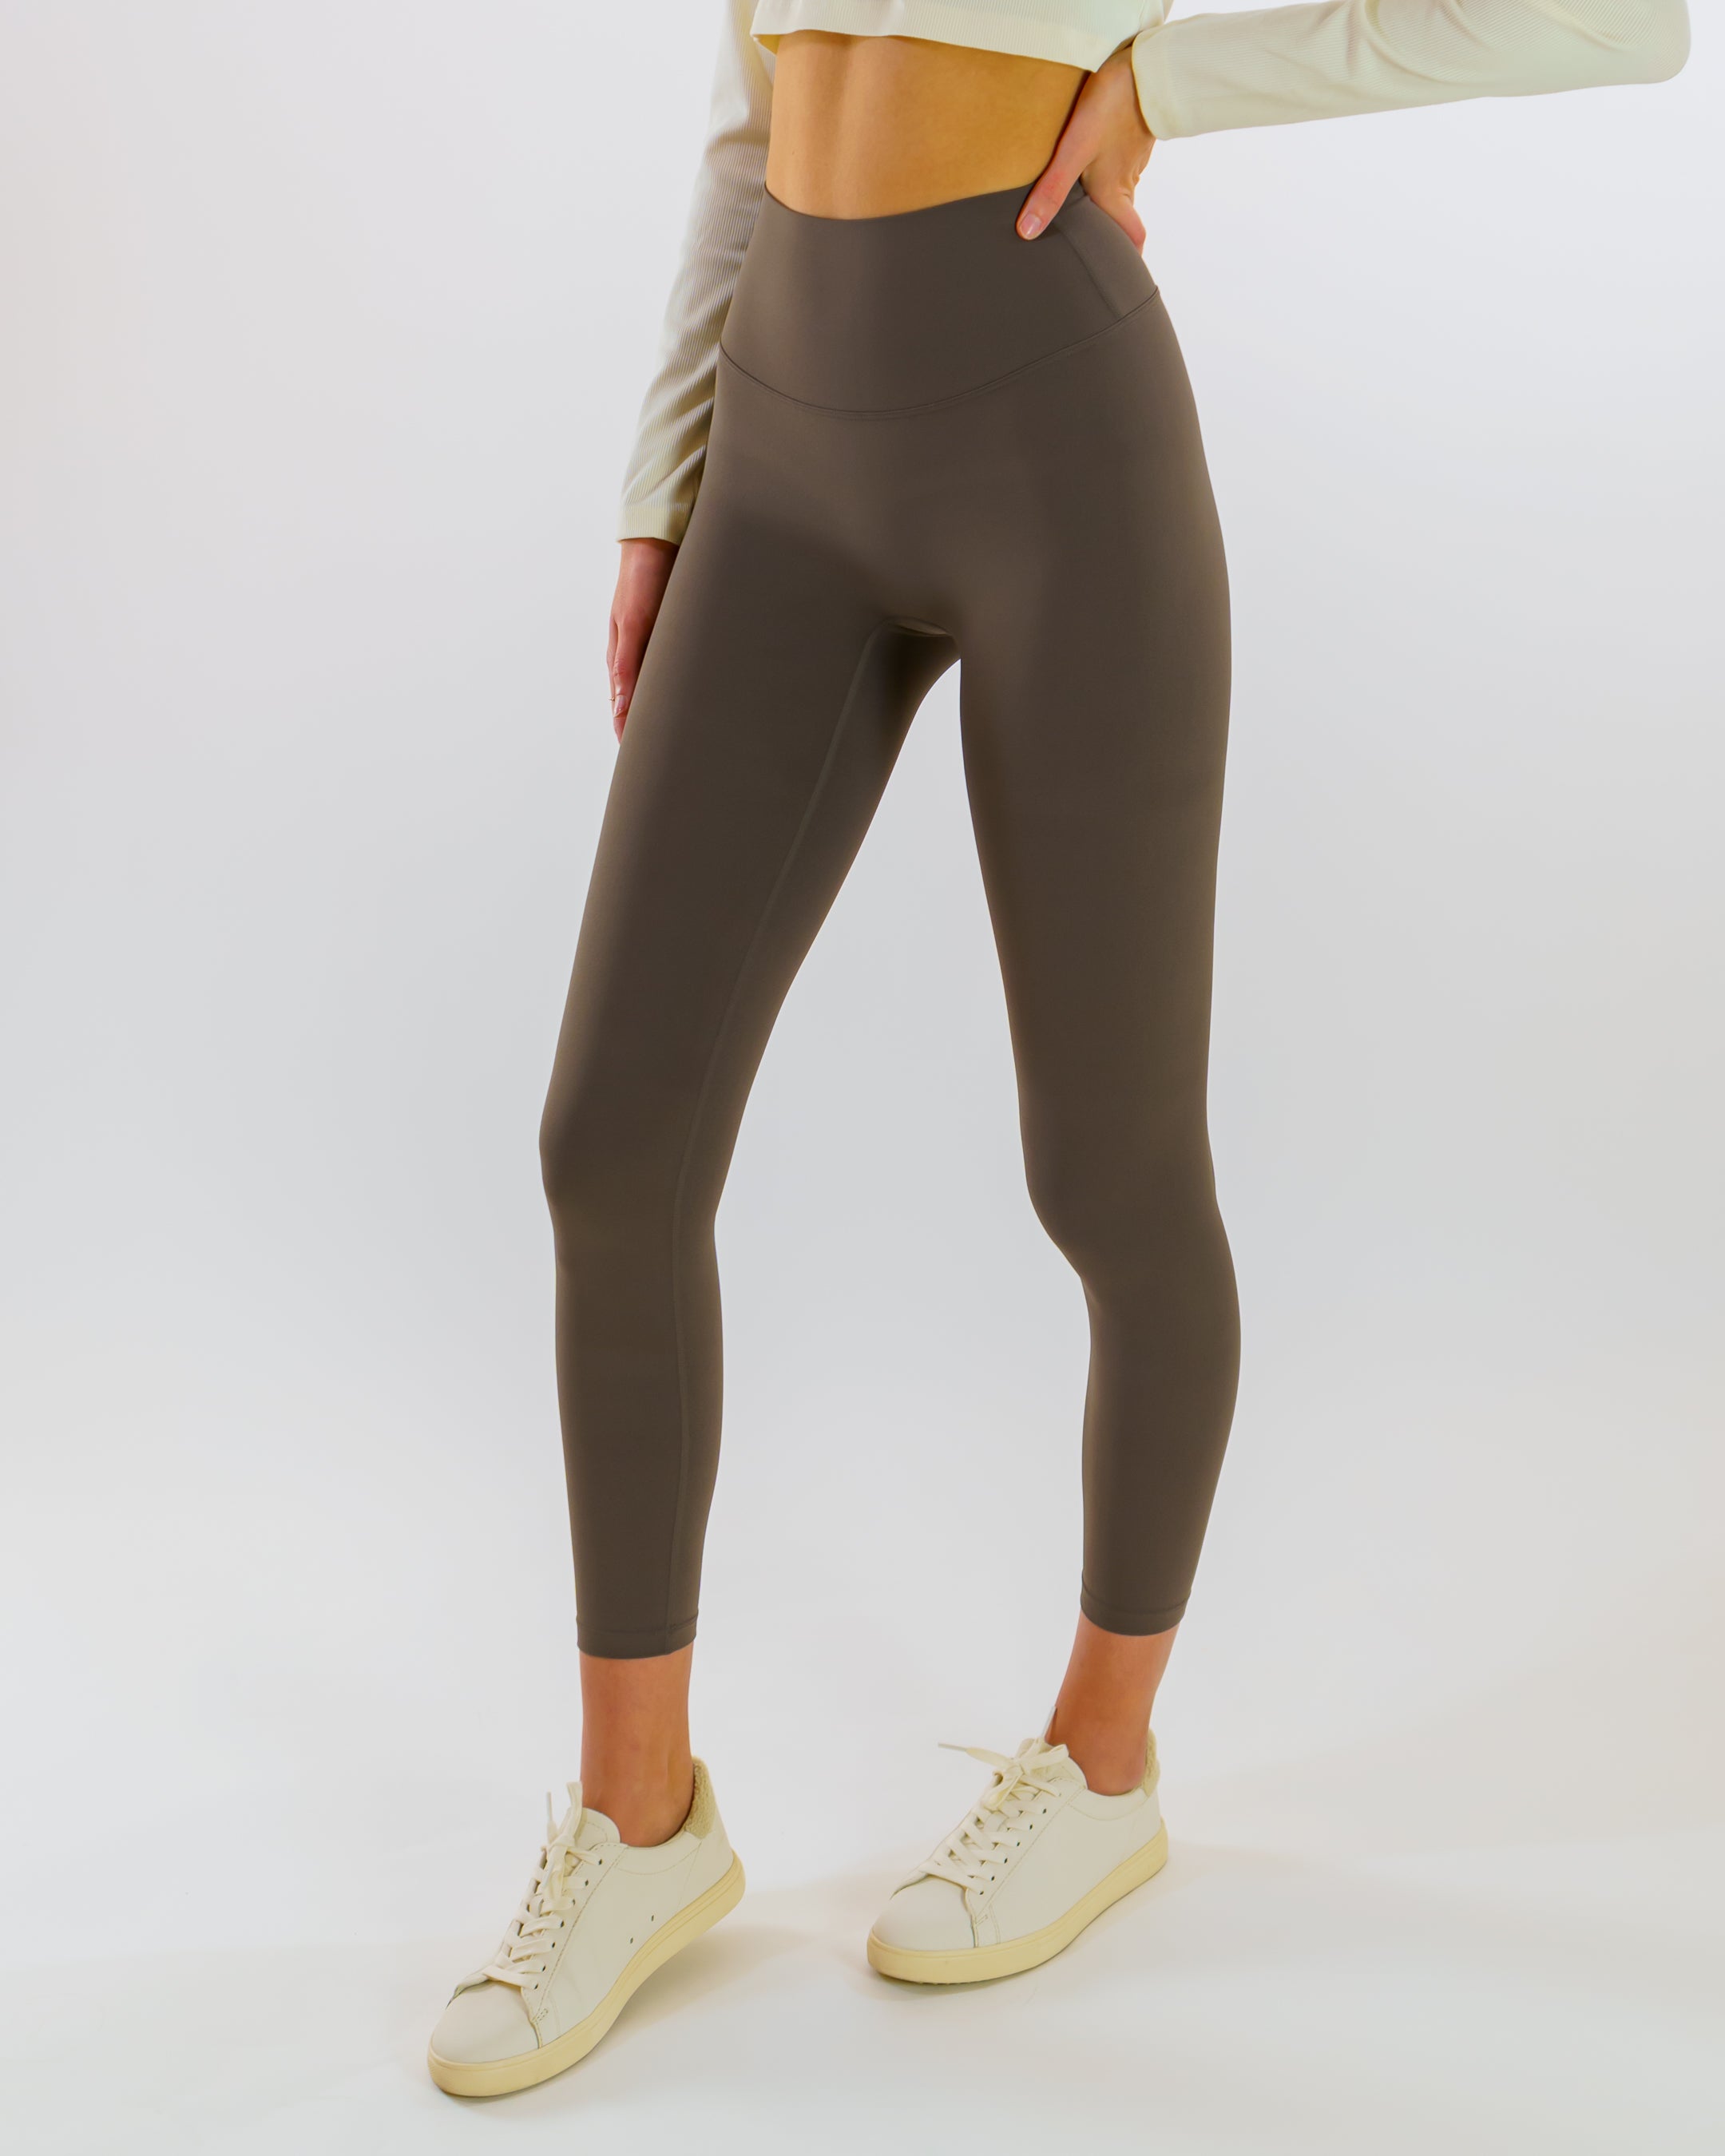 Black Lycra Leggings (XL) [Apparel] at Amazon Women's Clothing store